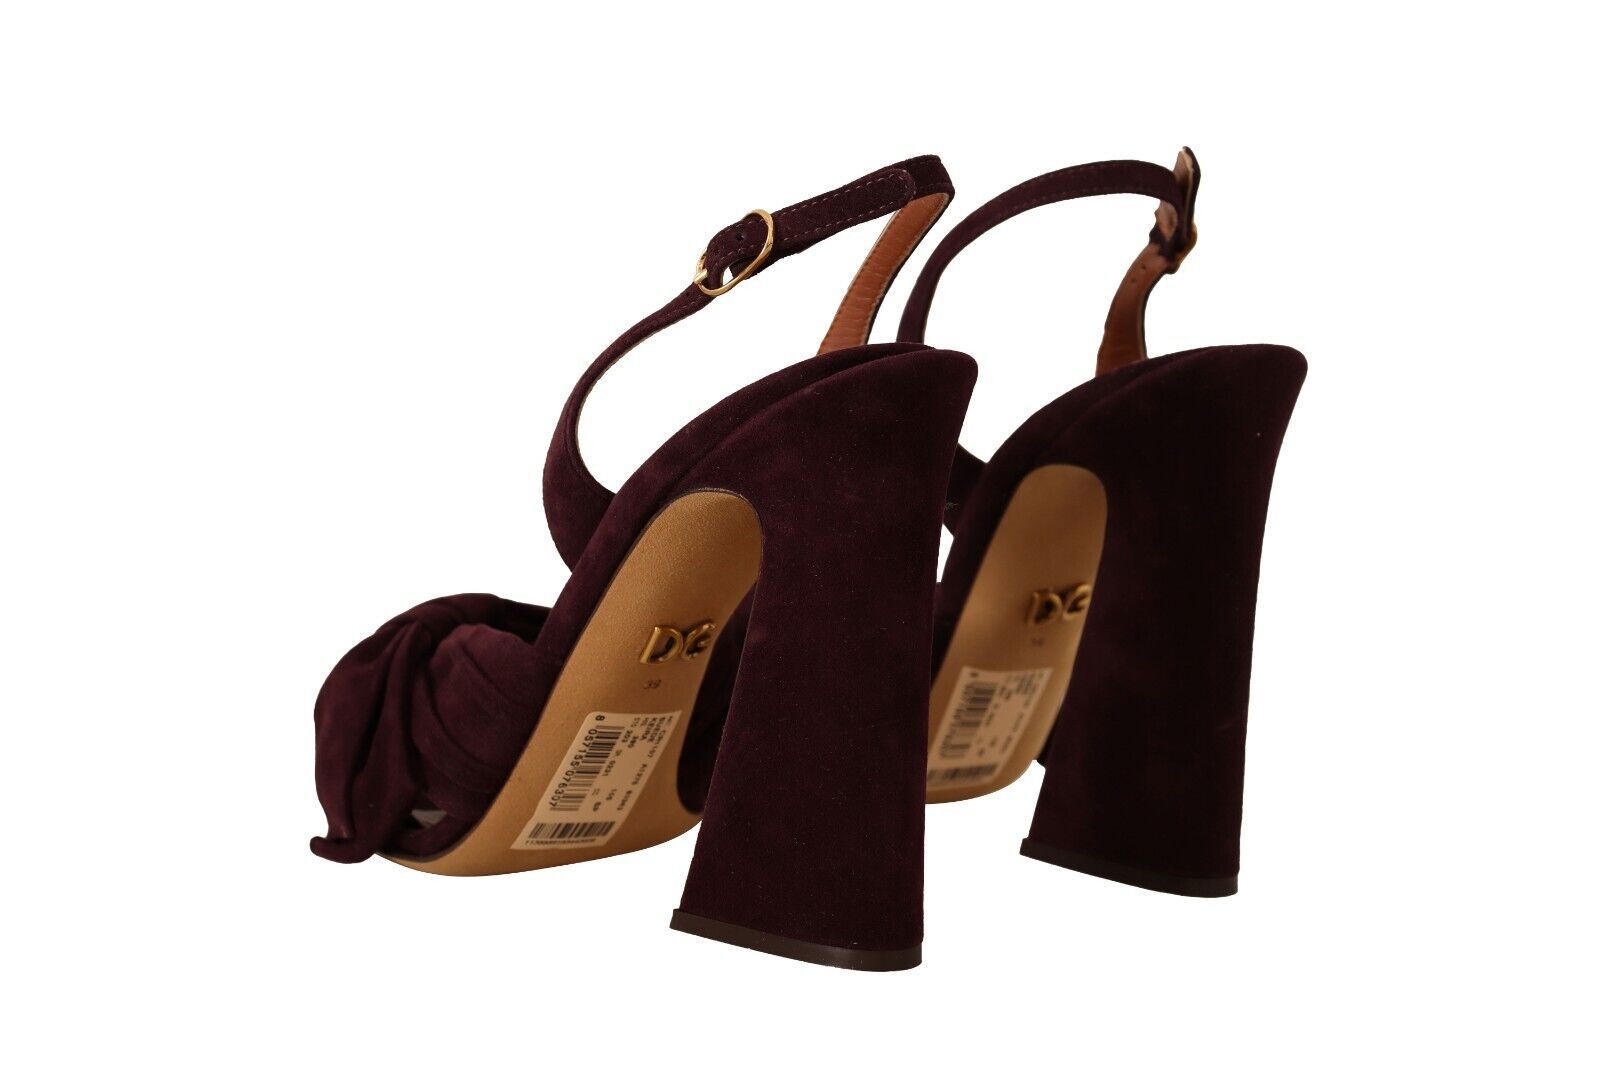 Dolce & Gabbana Elegant Purple Suede Heels Sandals